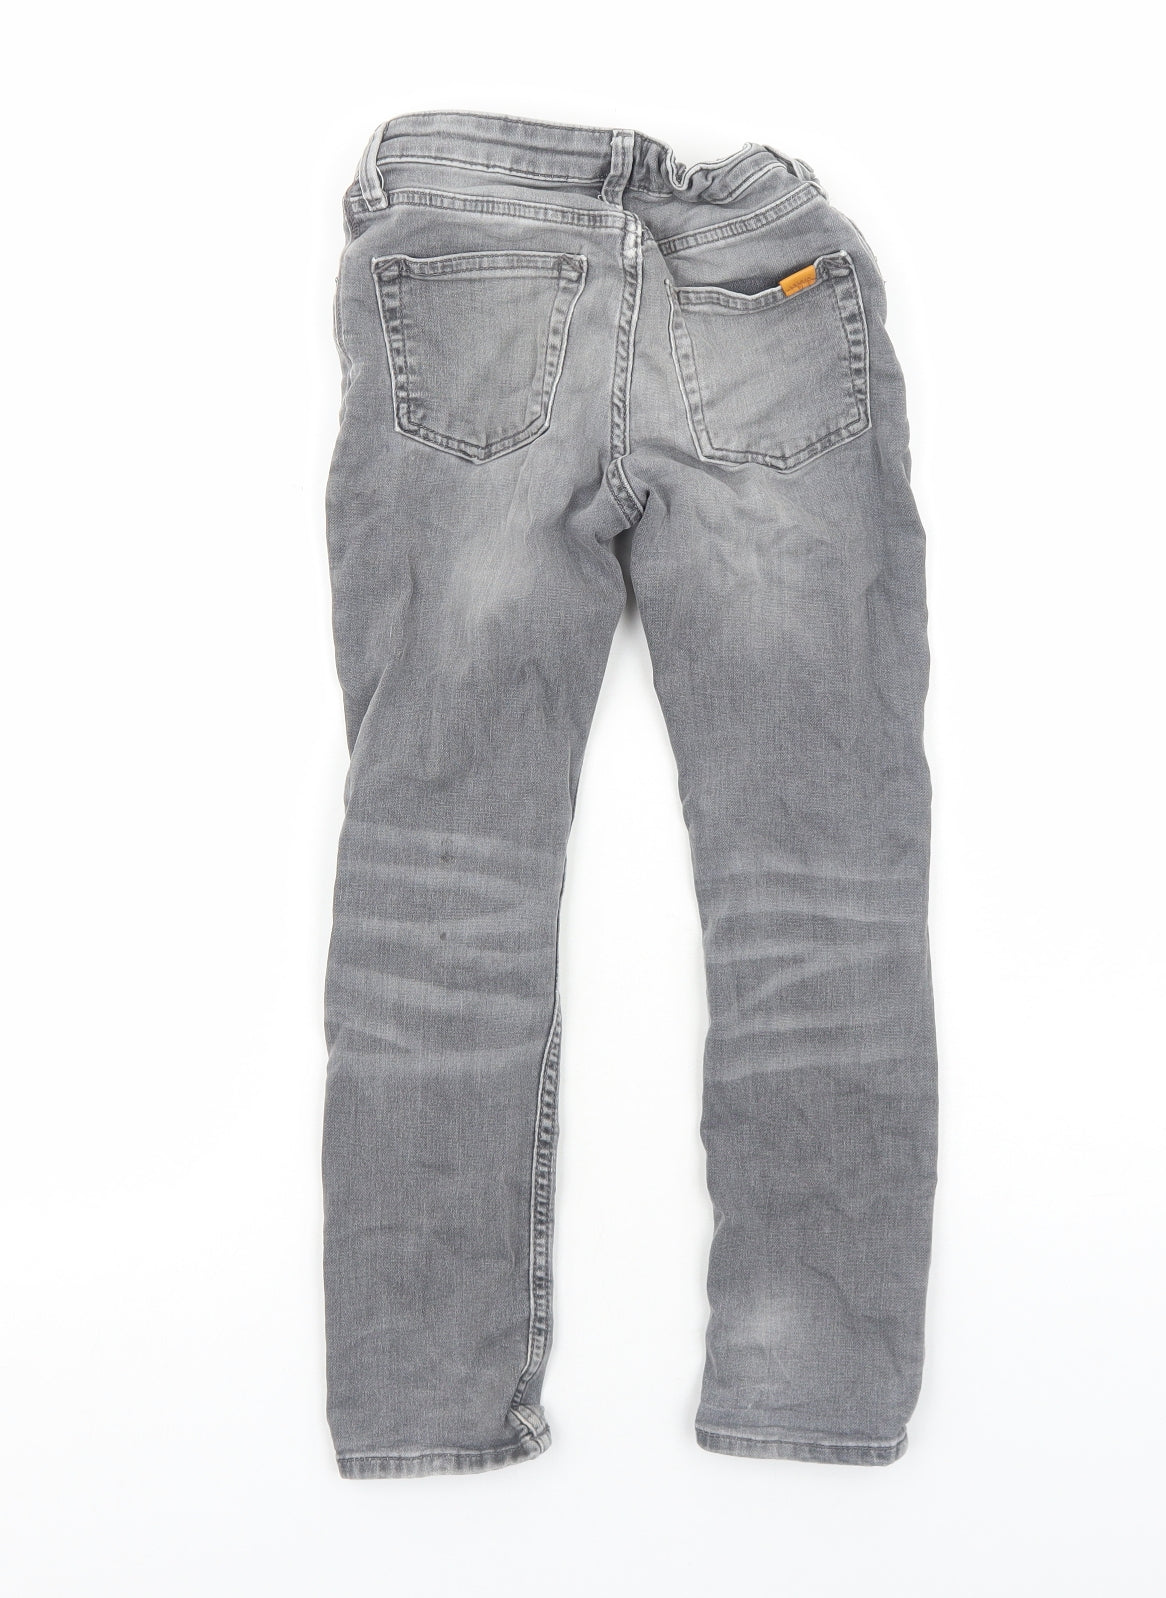 H&M Boys Grey Cotton Straight Jeans Size 7-8 Years Regular Zip